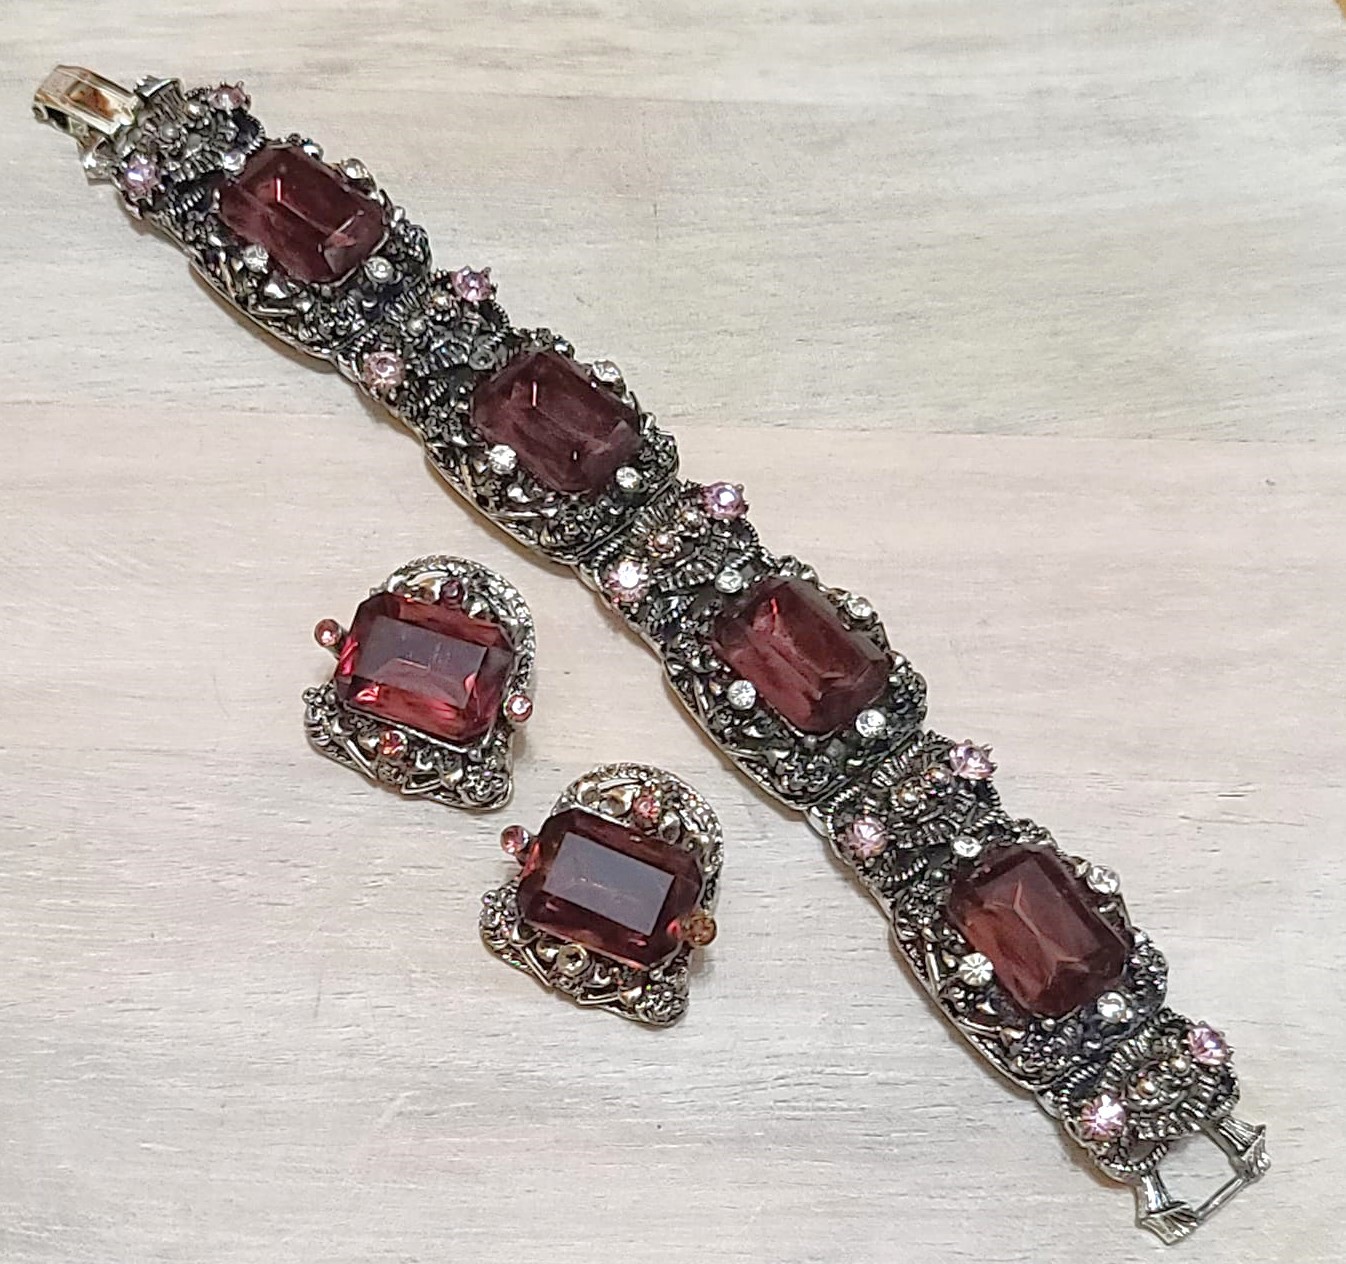 Rhinestone chunky bracelet and clip on earrings, vintage set, purple glass and pink rhinestones